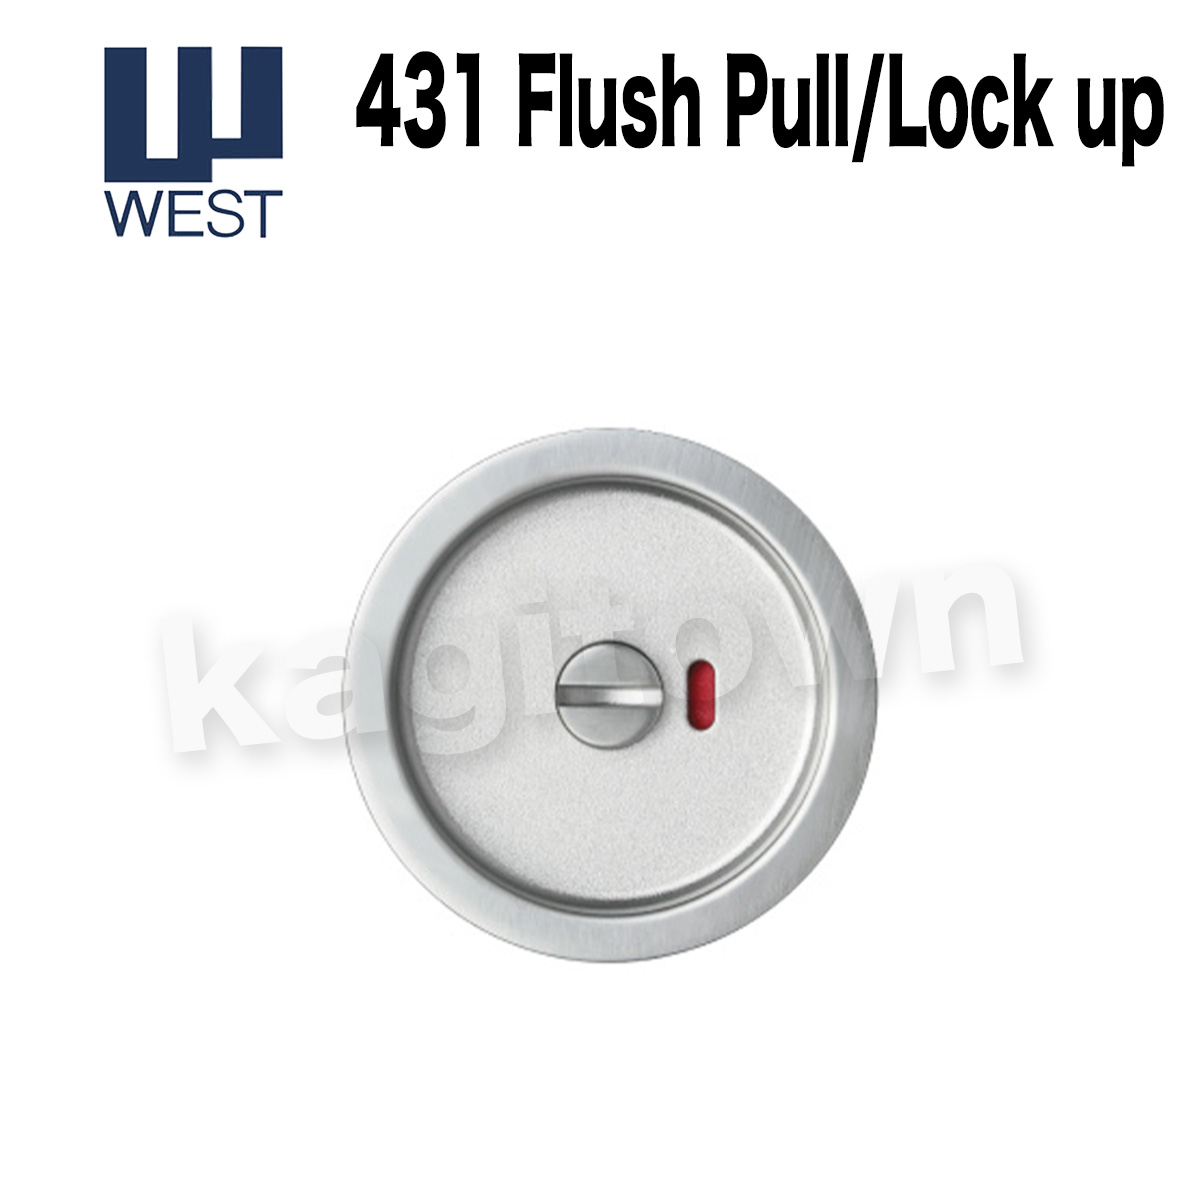 WEST 【ウエスト】戸引手/間仕切錠[WEST-431]Agaho pull 431 Flush Pull/Lock up 